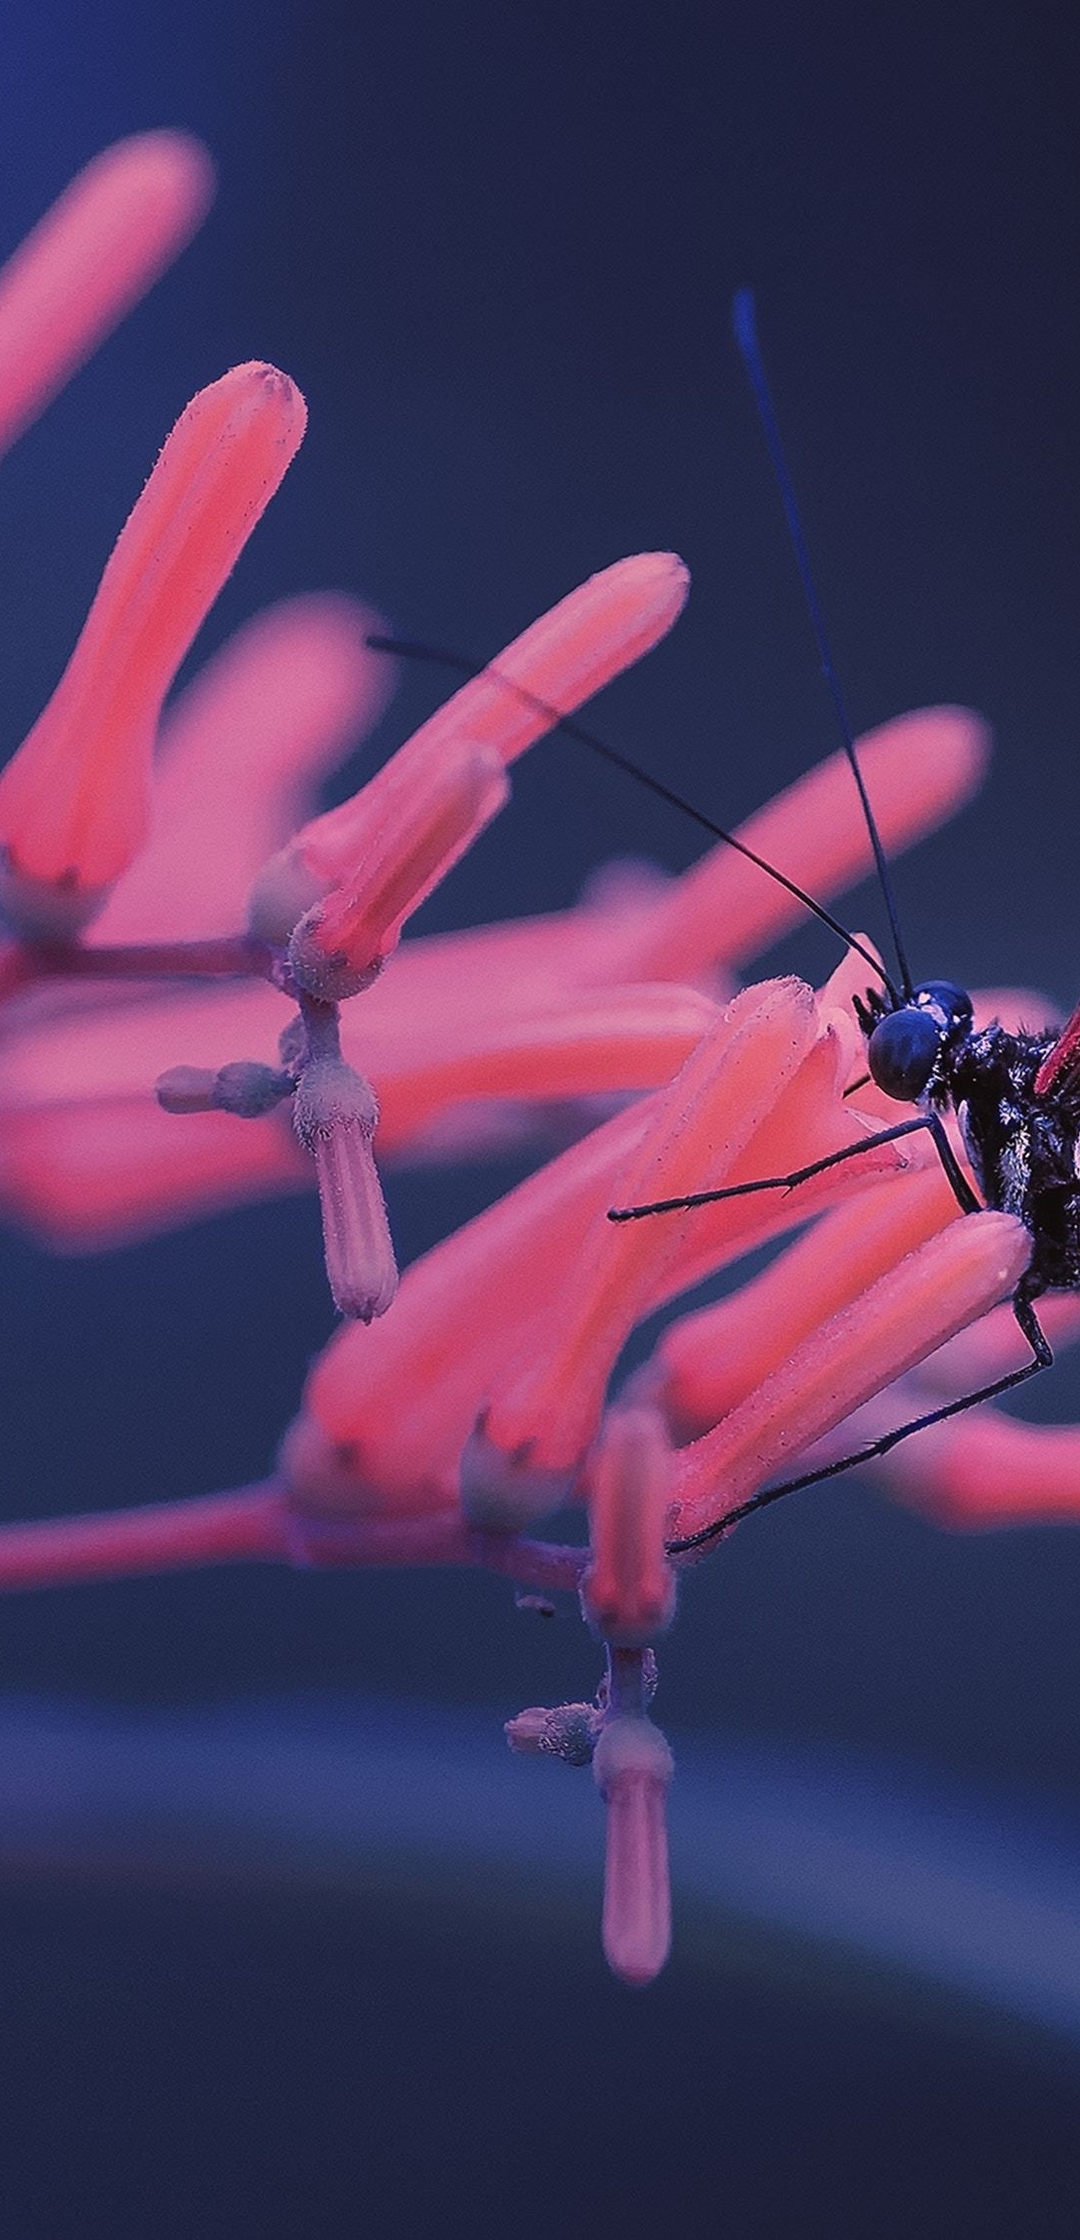 Image: Butterfly, wings, sitting, flower, stems, blurring